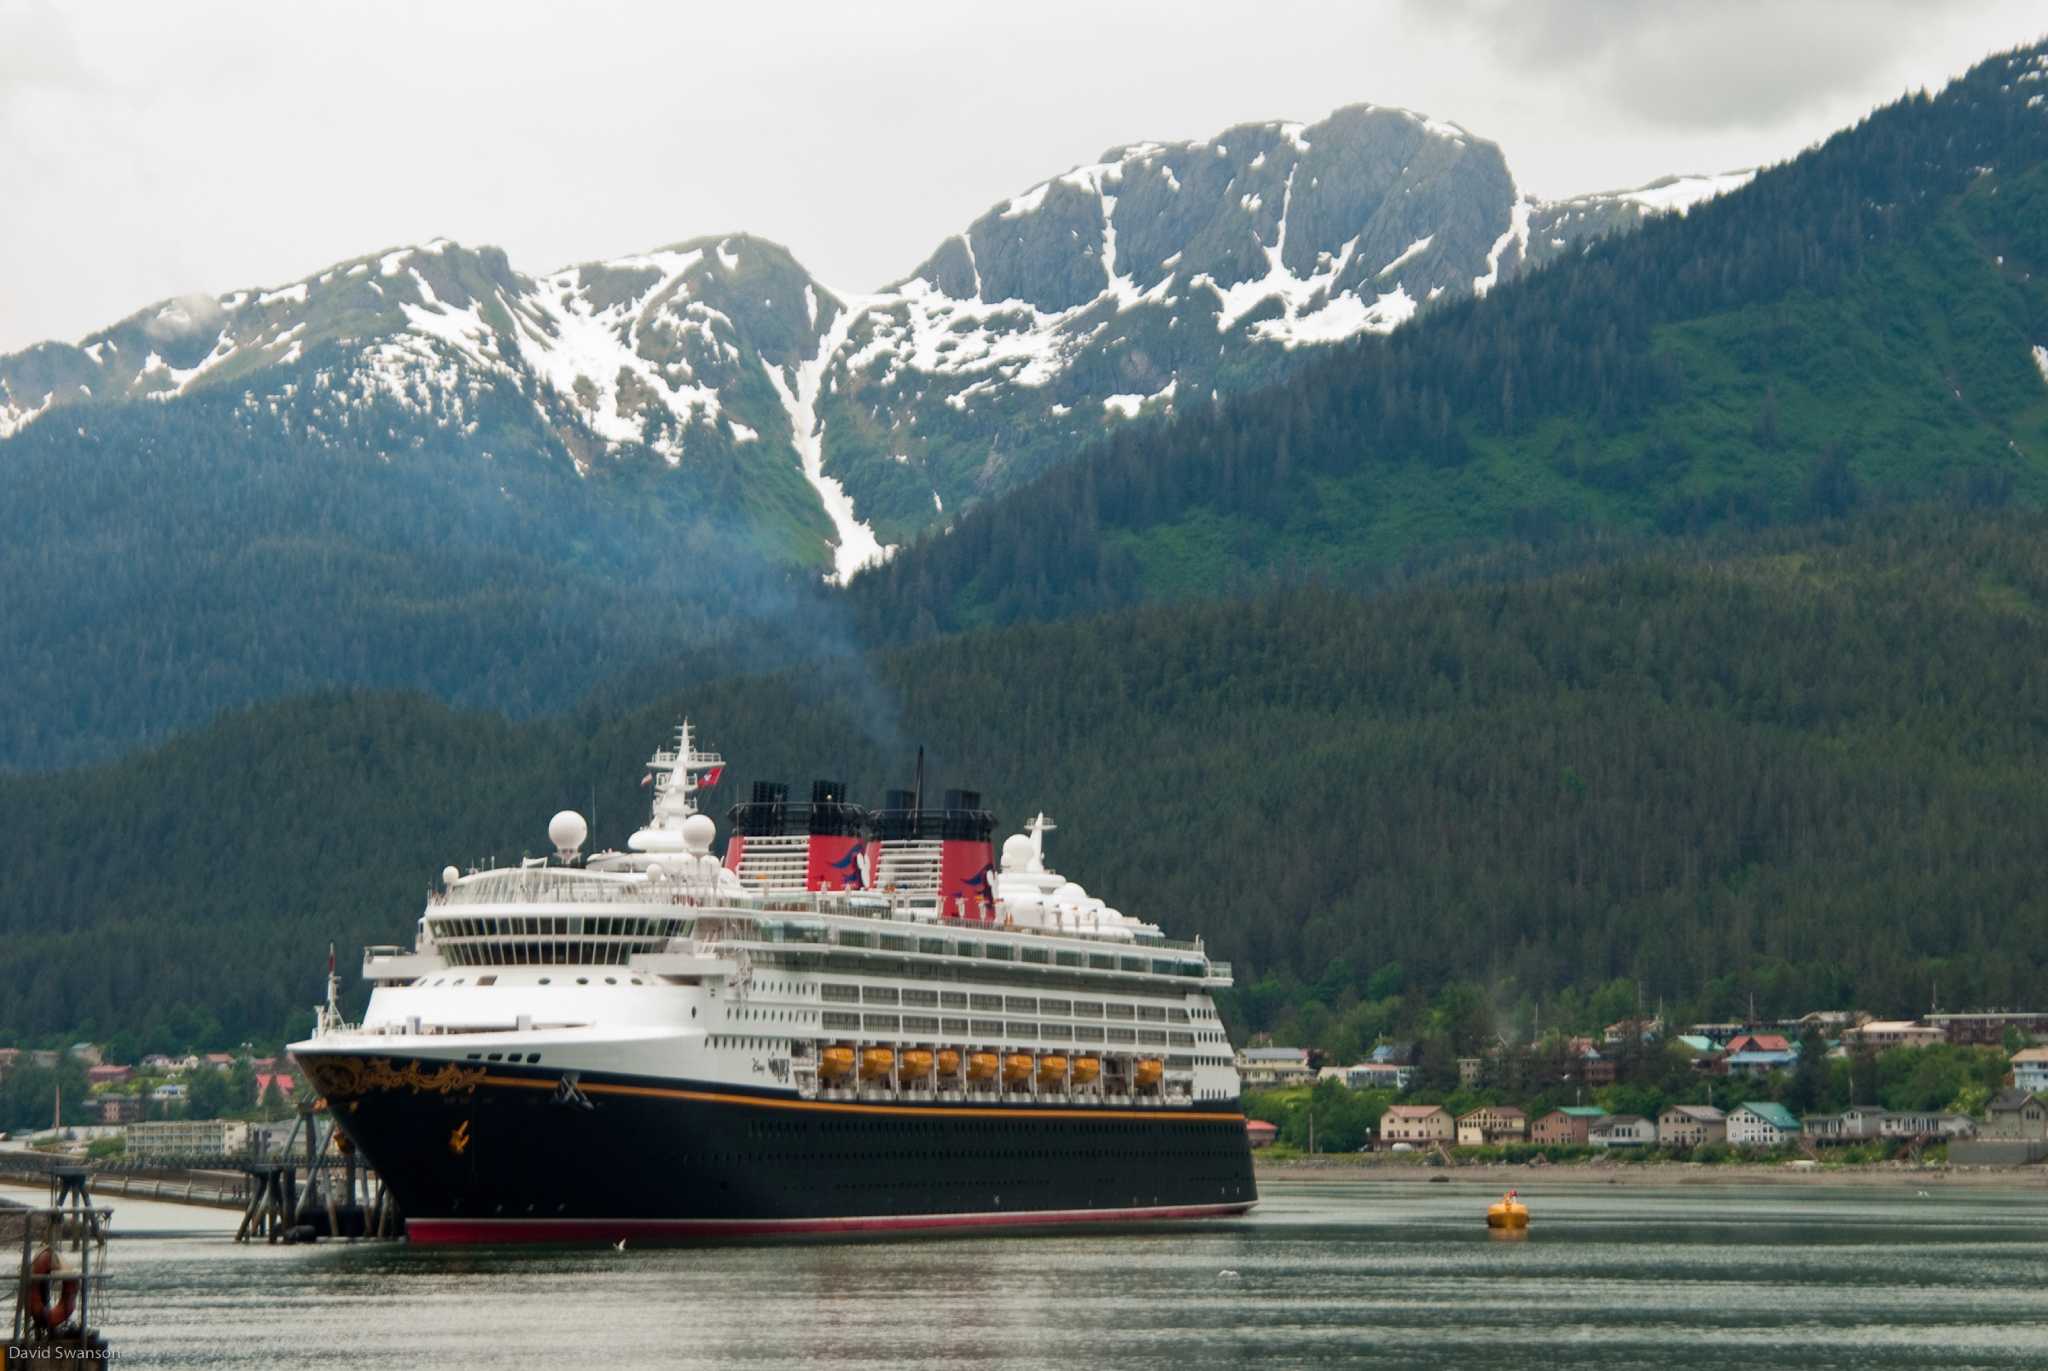 Mainstream Alaskan cruises: pros and cons